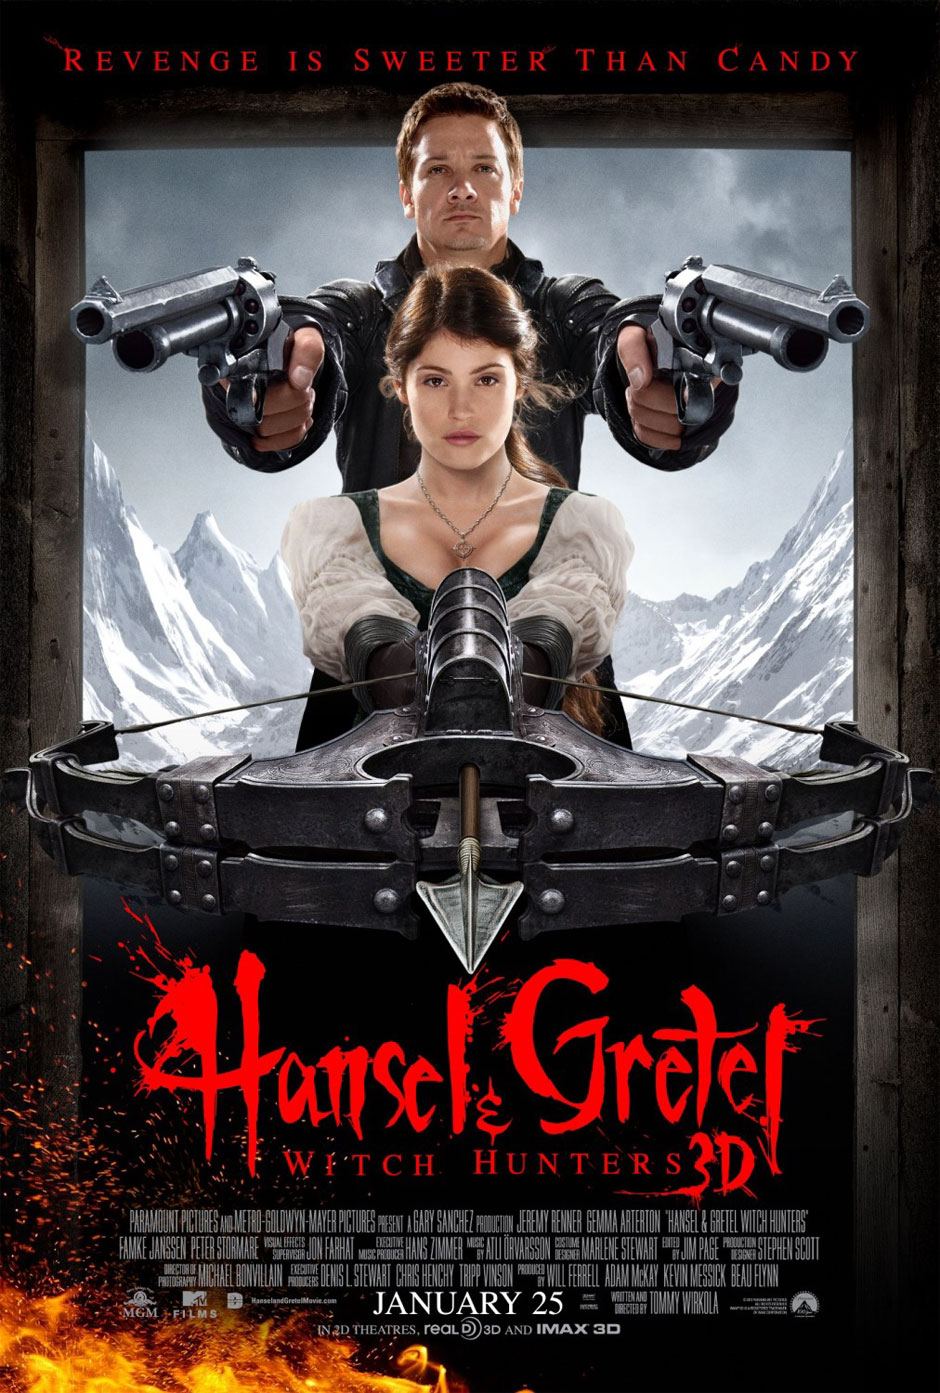 Hansel & Gretel - Witch Hunters (2013)